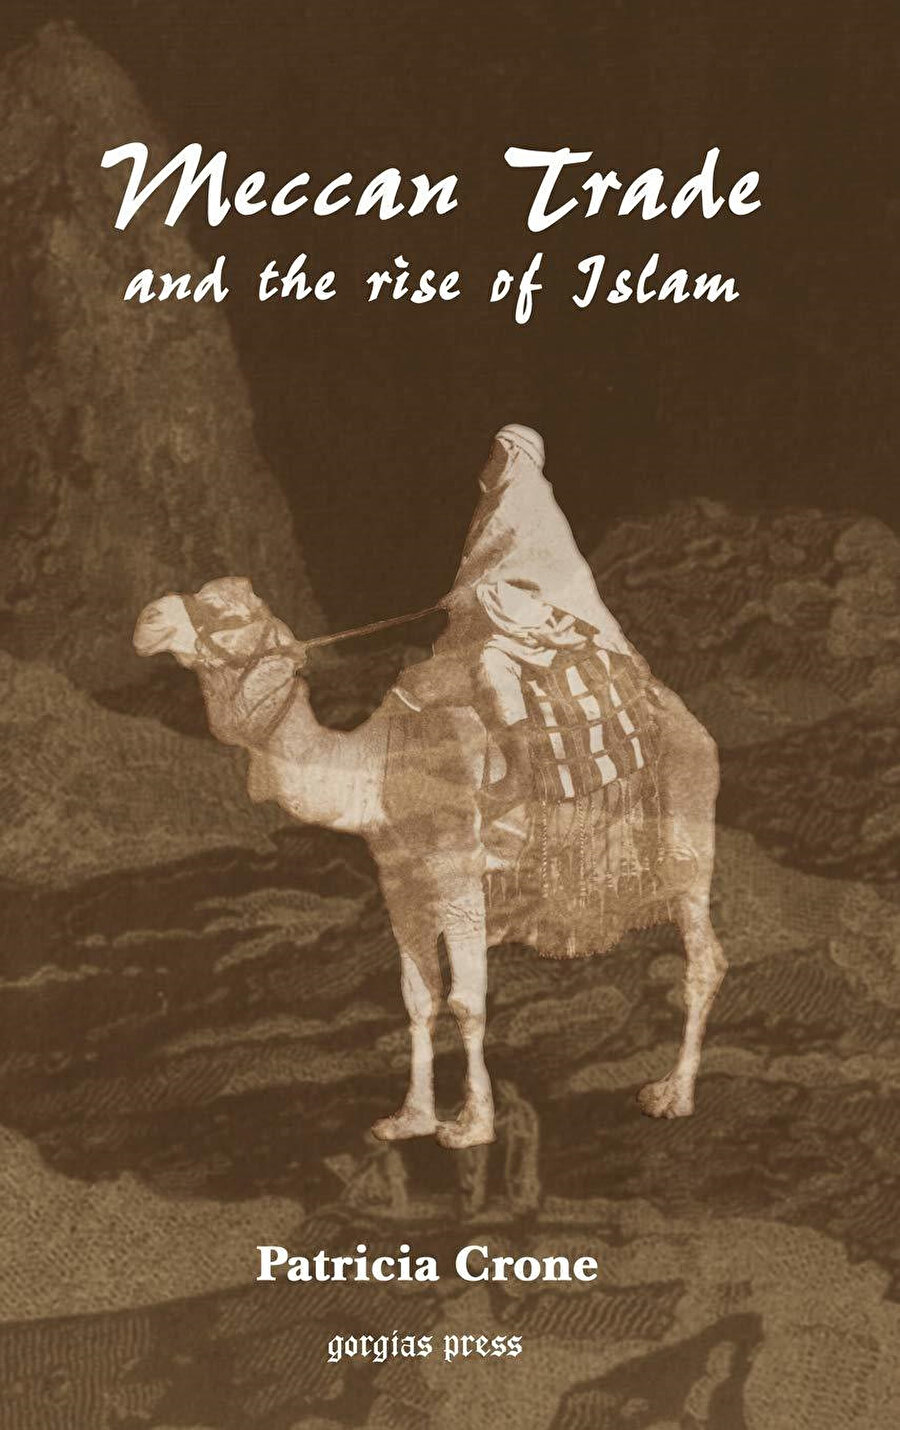 Mekke Ticareti ve İslam’ın Yükselişi,Patricia Crone, Meccan Trade and the Rise of Islam, Gorgias Pr Llc, 2004, 312 s.